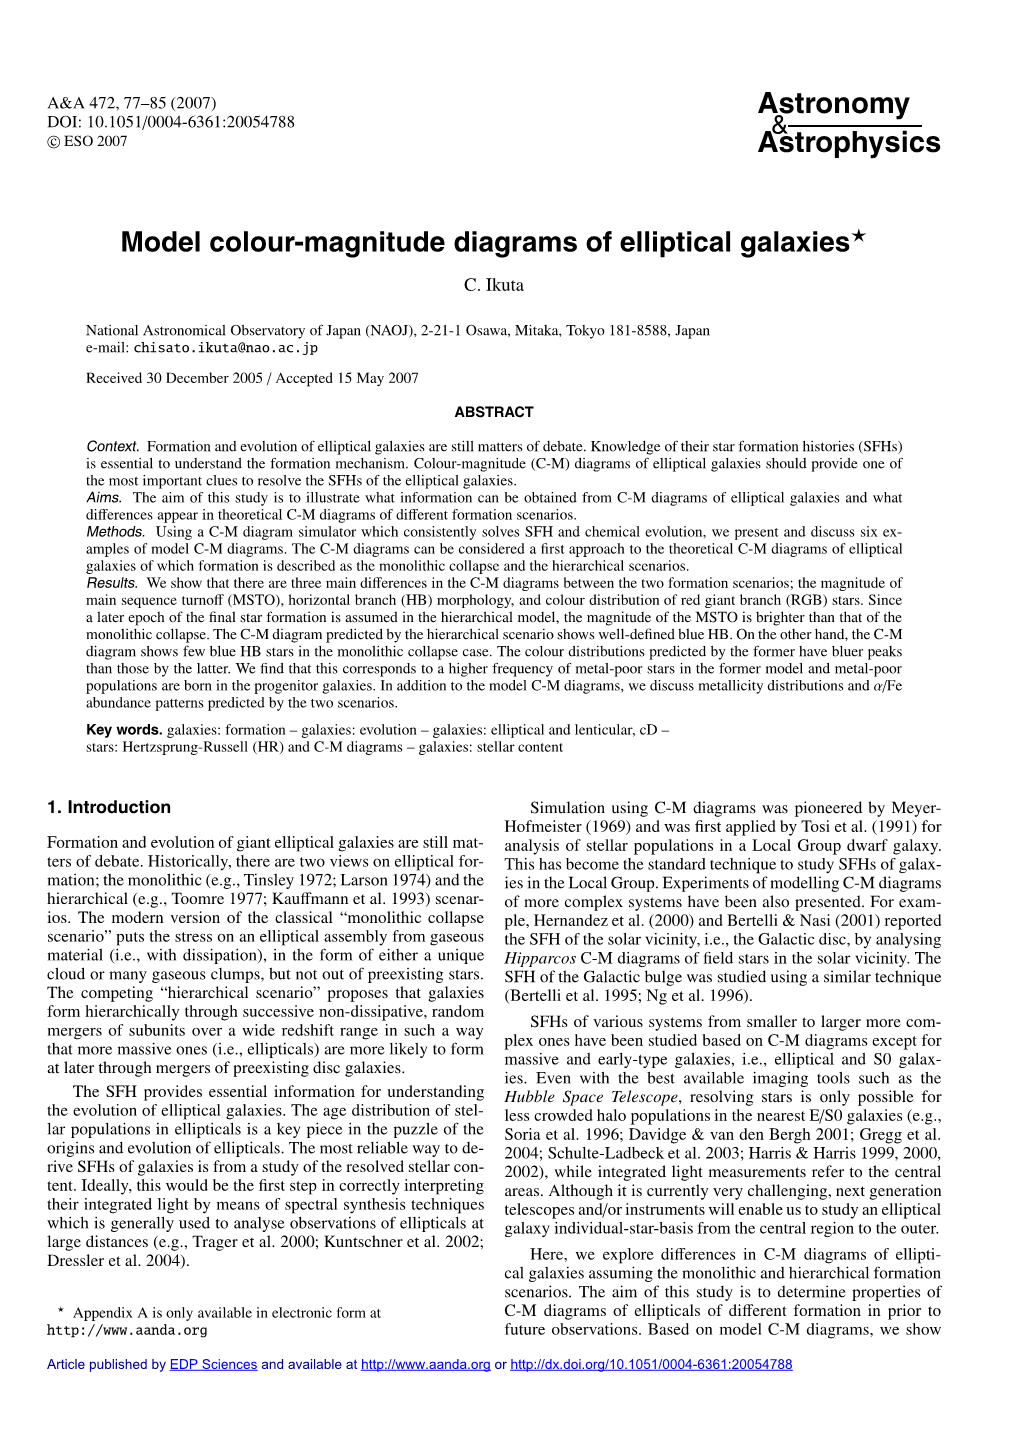 Model Colour-Magnitude Diagrams of Elliptical Galaxies